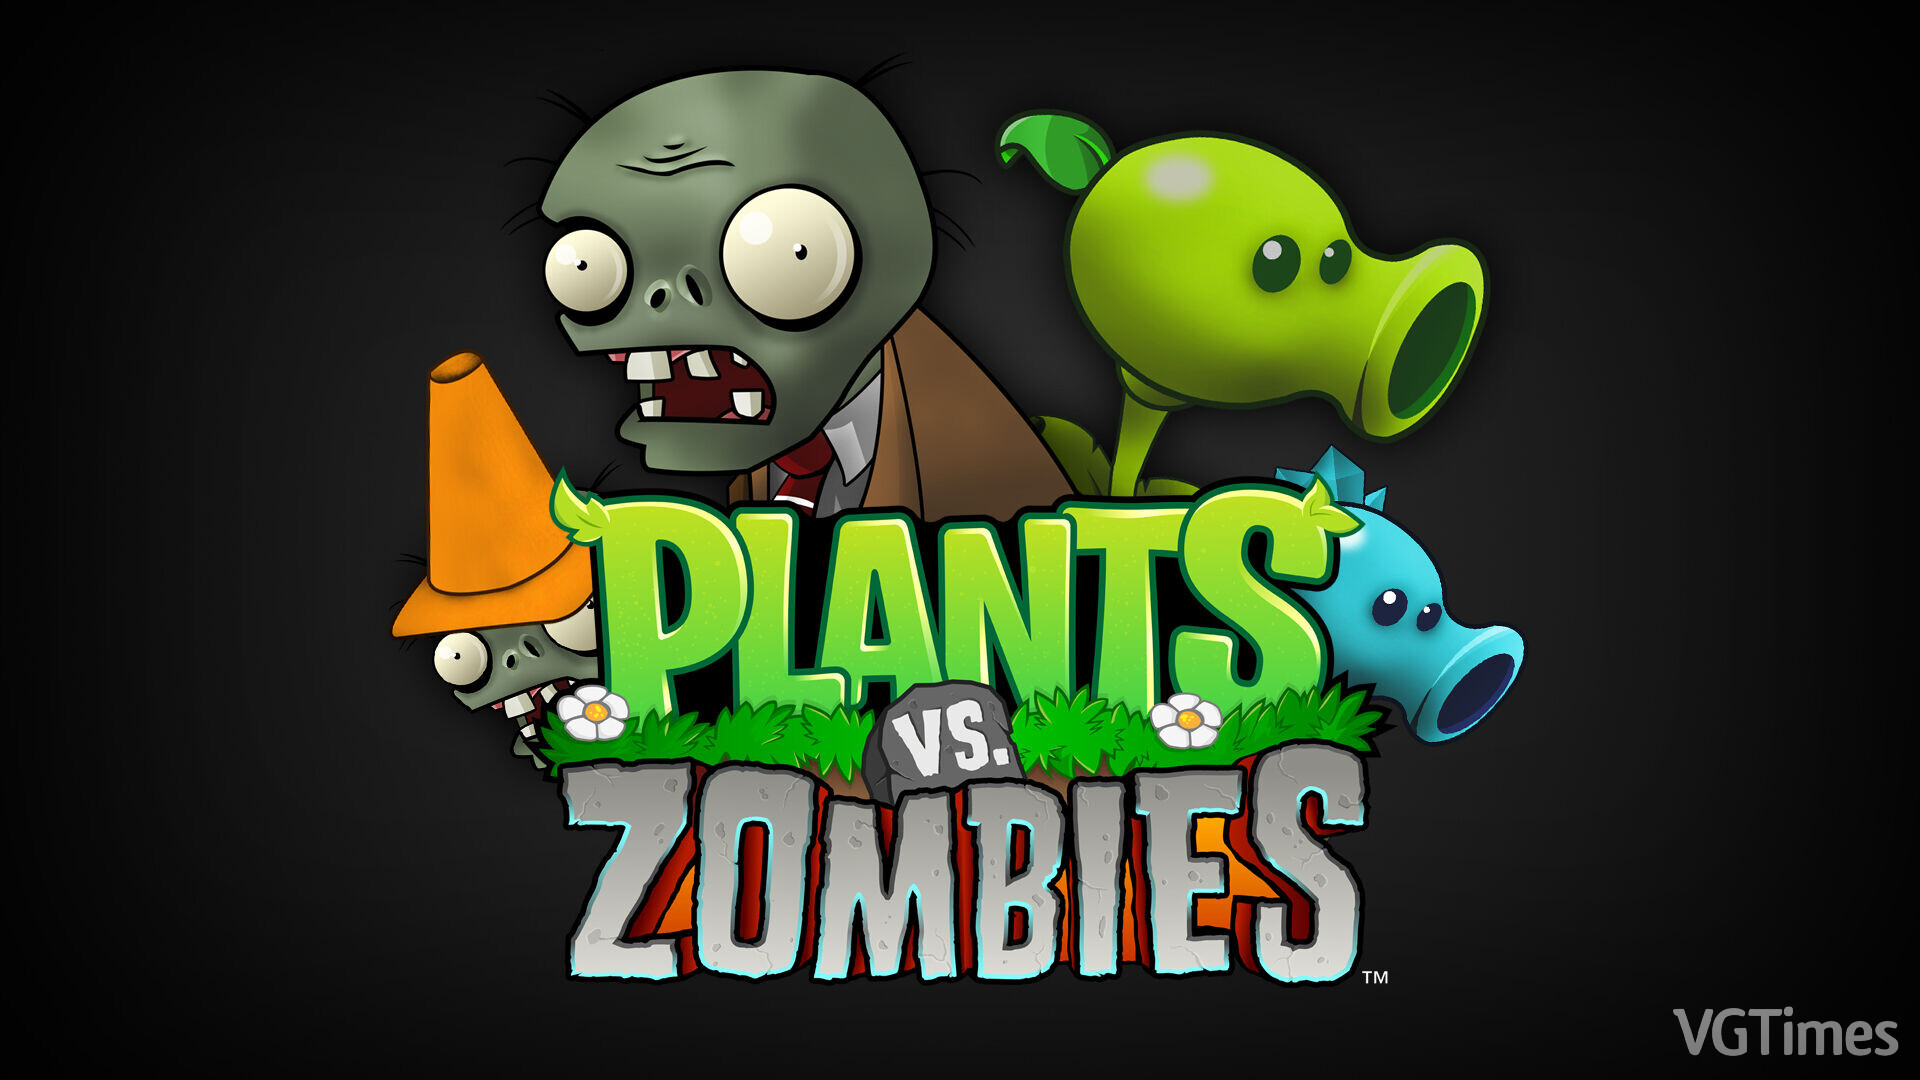 Plants vs zombies video game